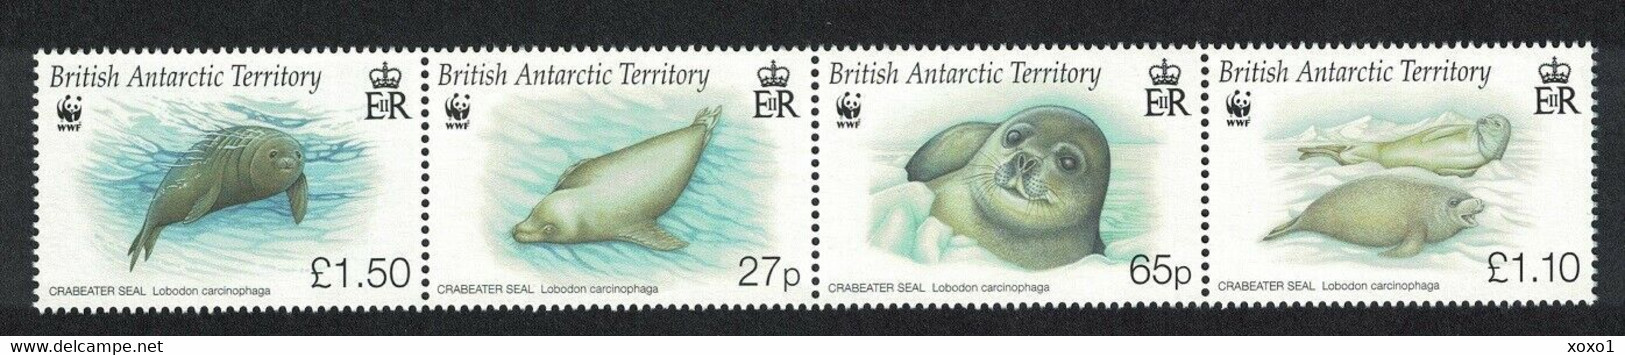 British Antarctic Territory (BAT) 2009 MiNr. 505 - 508 WWF Marine Life Crabeater Seal 4v  MNH**  20.00 € - Neufs